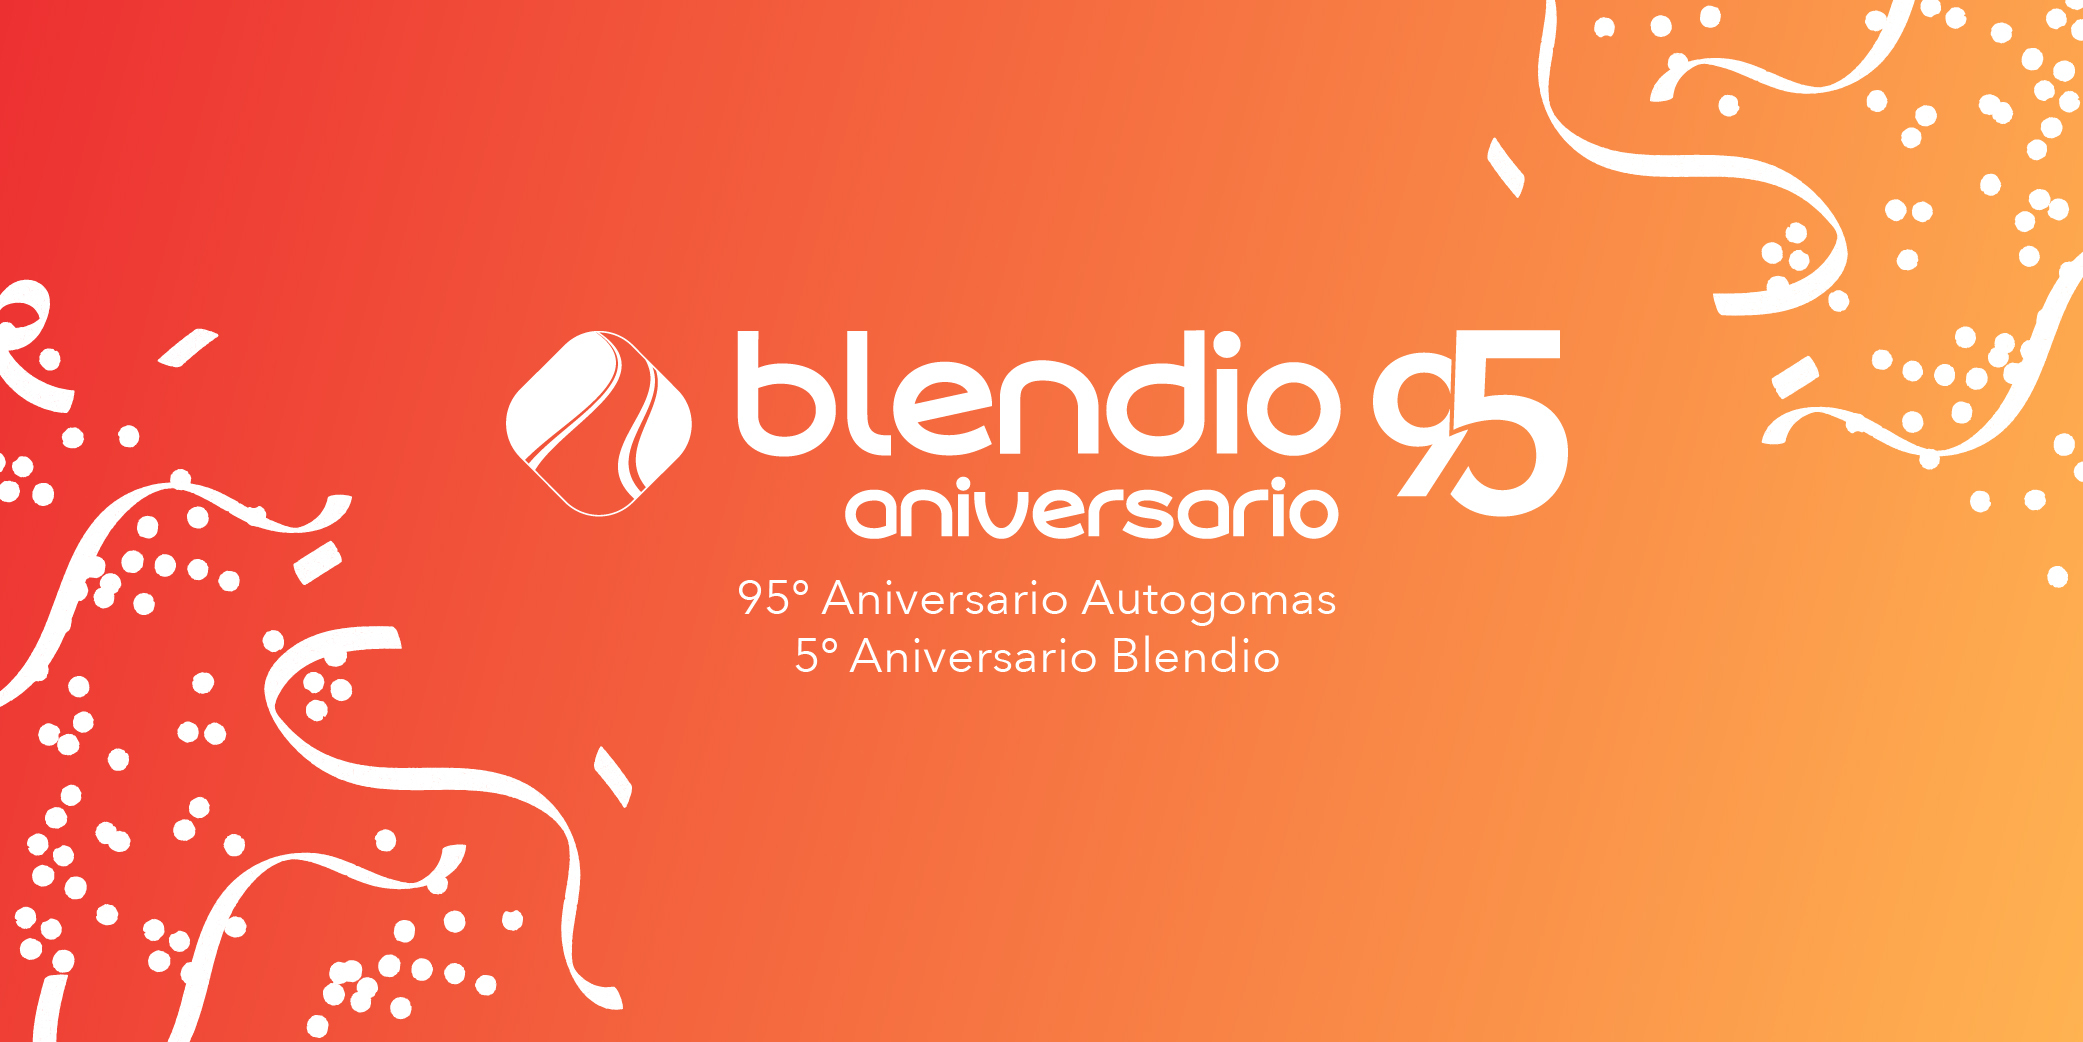 Blendio celebra su 95 cumpleaños